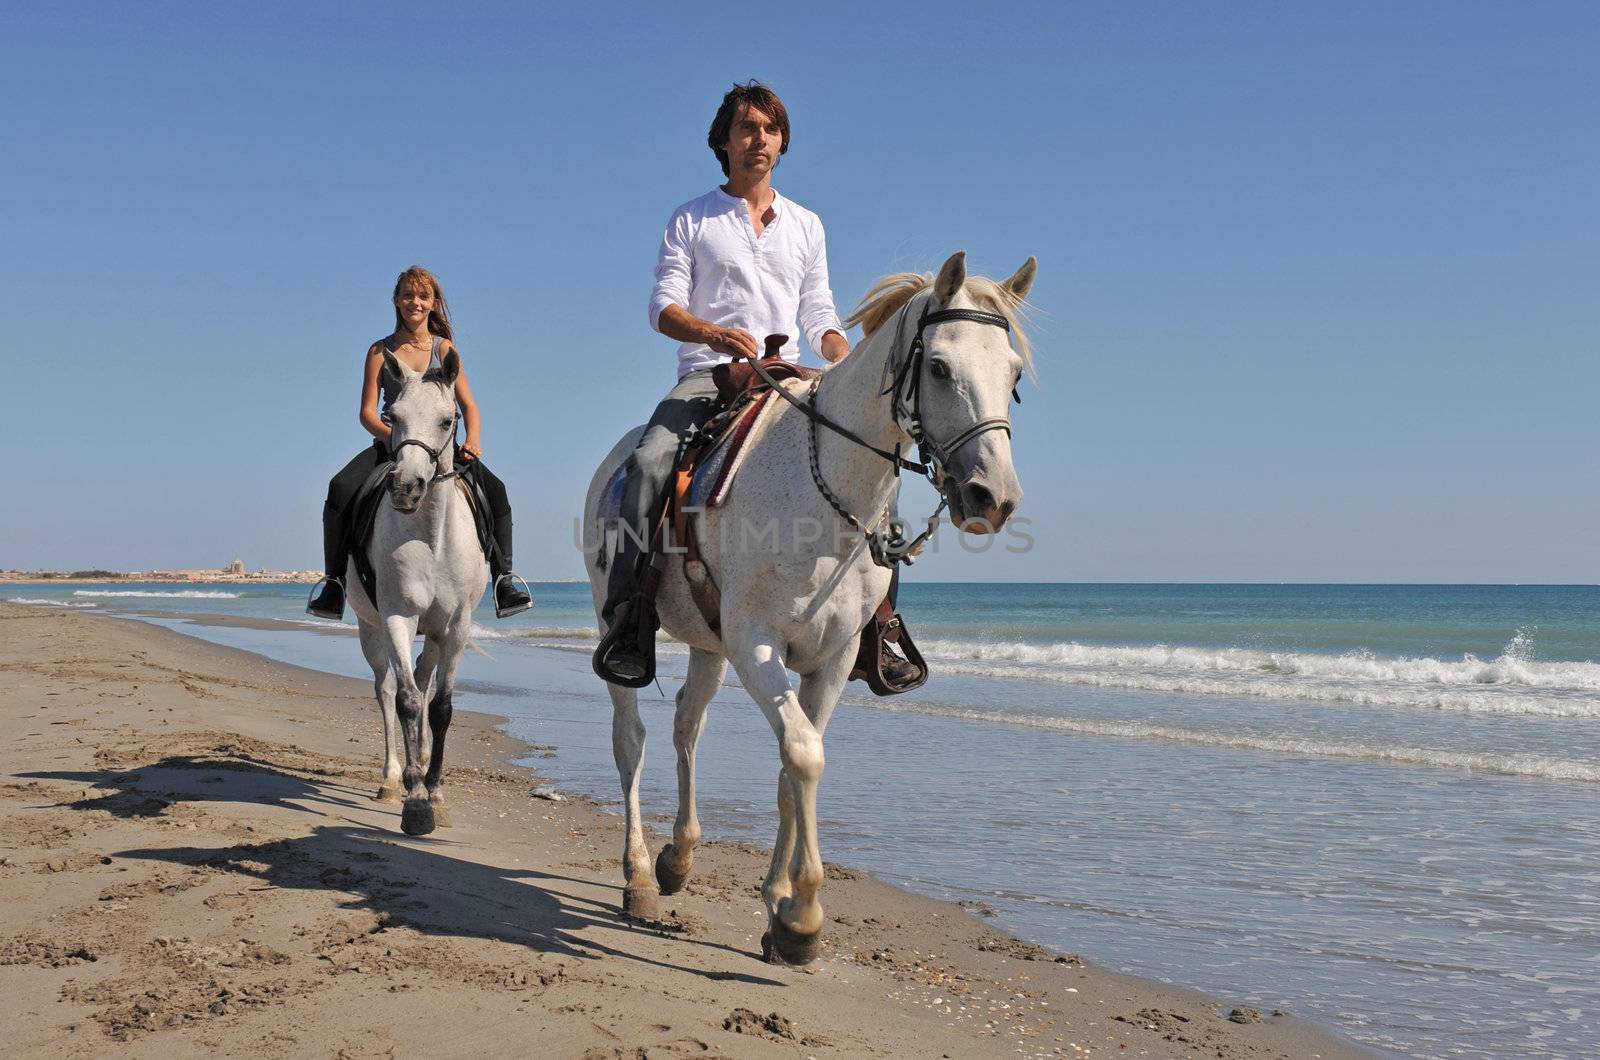 horseback riding on the beach by cynoclub